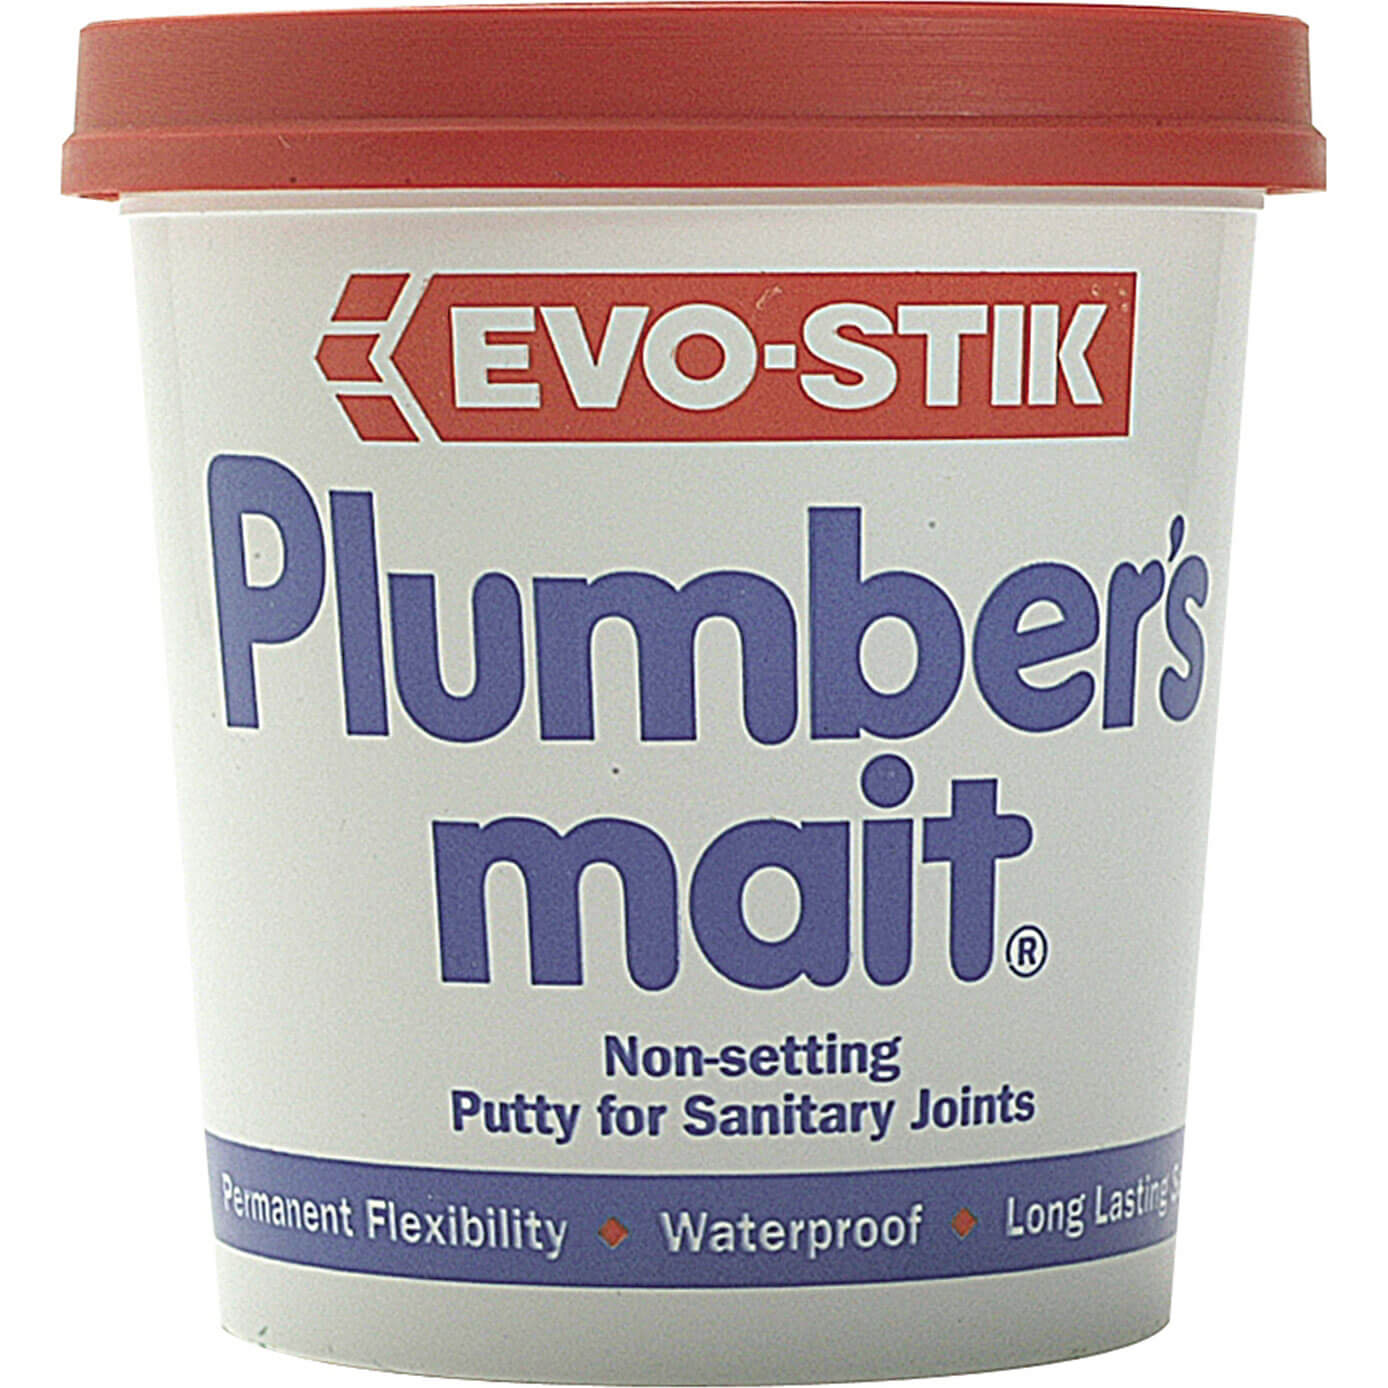 Image of Evo-stik Plumbers Mait 750g